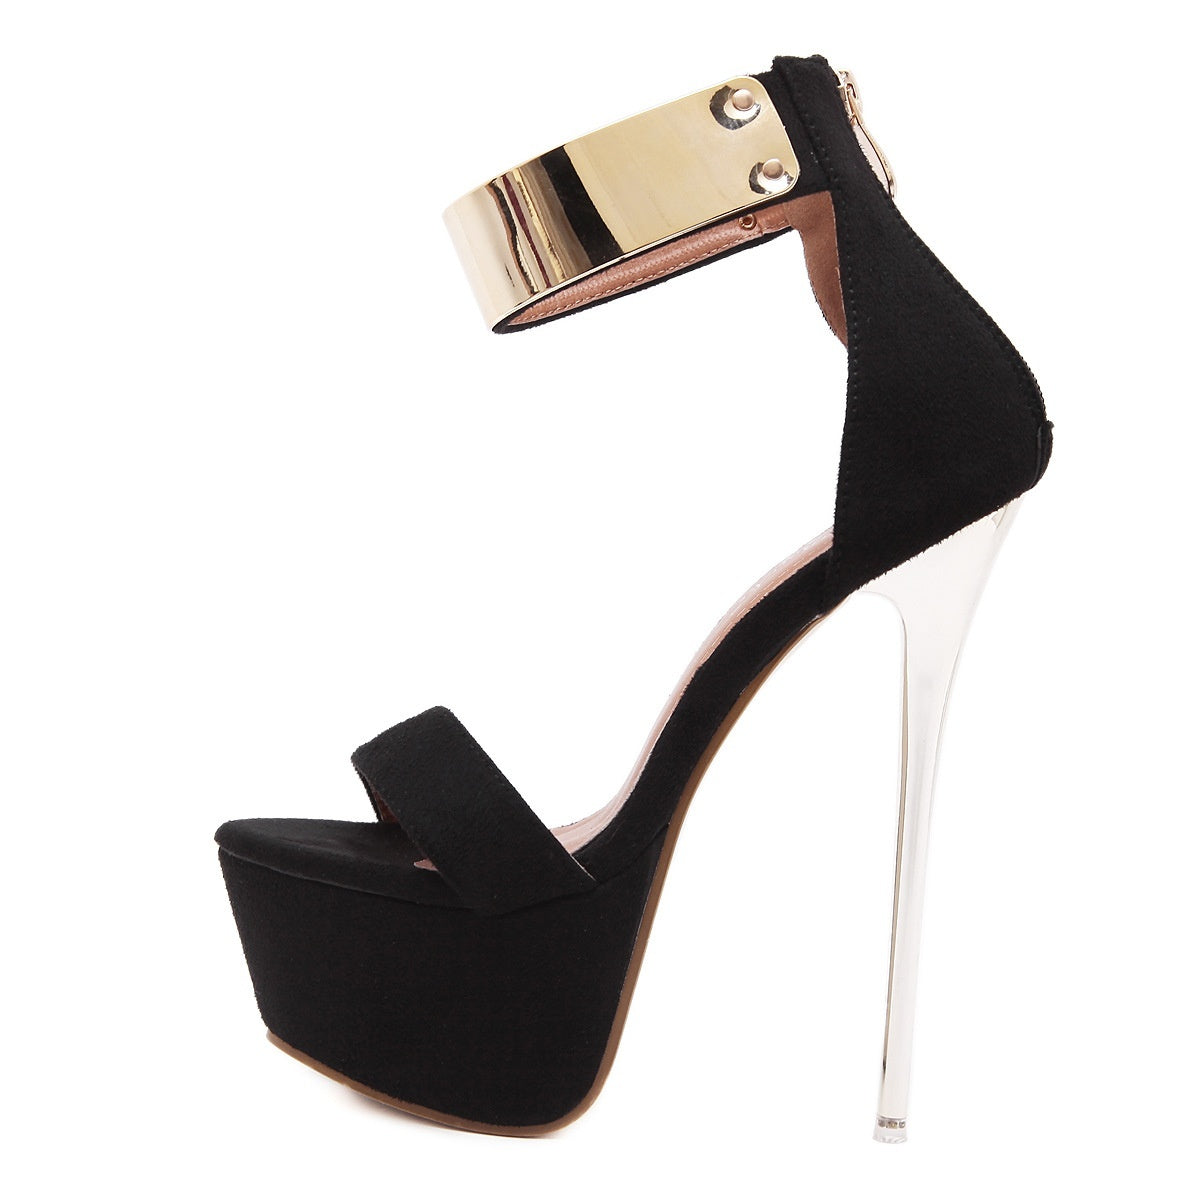 Party Women Shoes High-heeled 16cm Platform Sandals